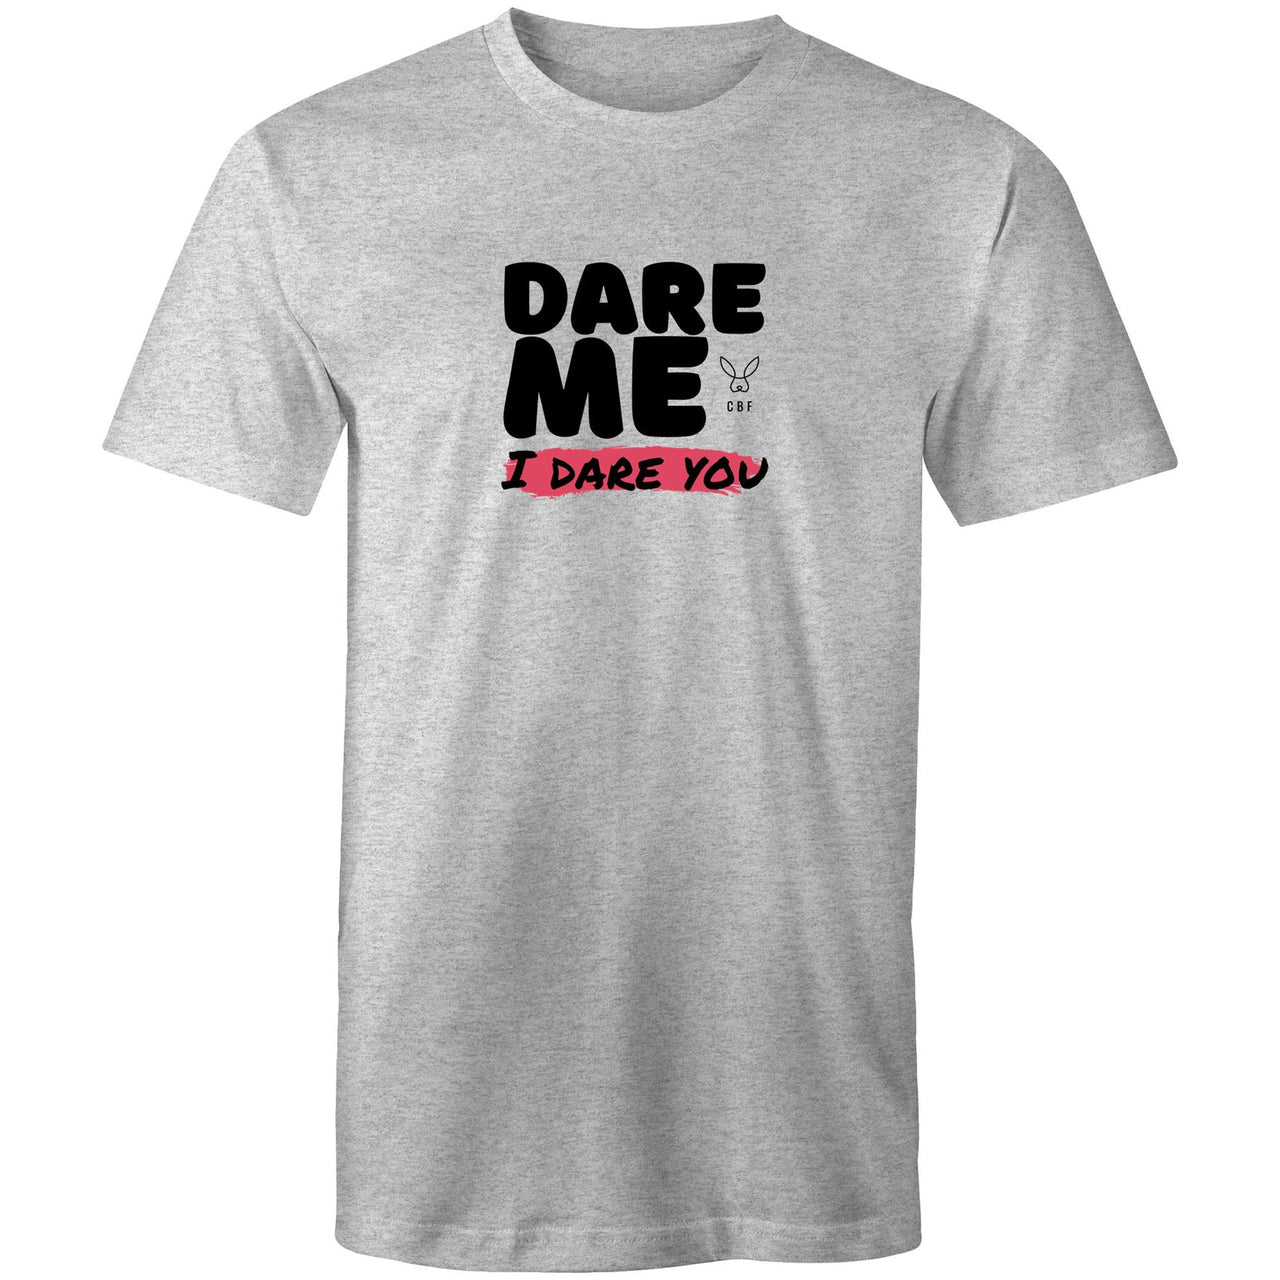 CBF Dare Me Crew T-Shirt